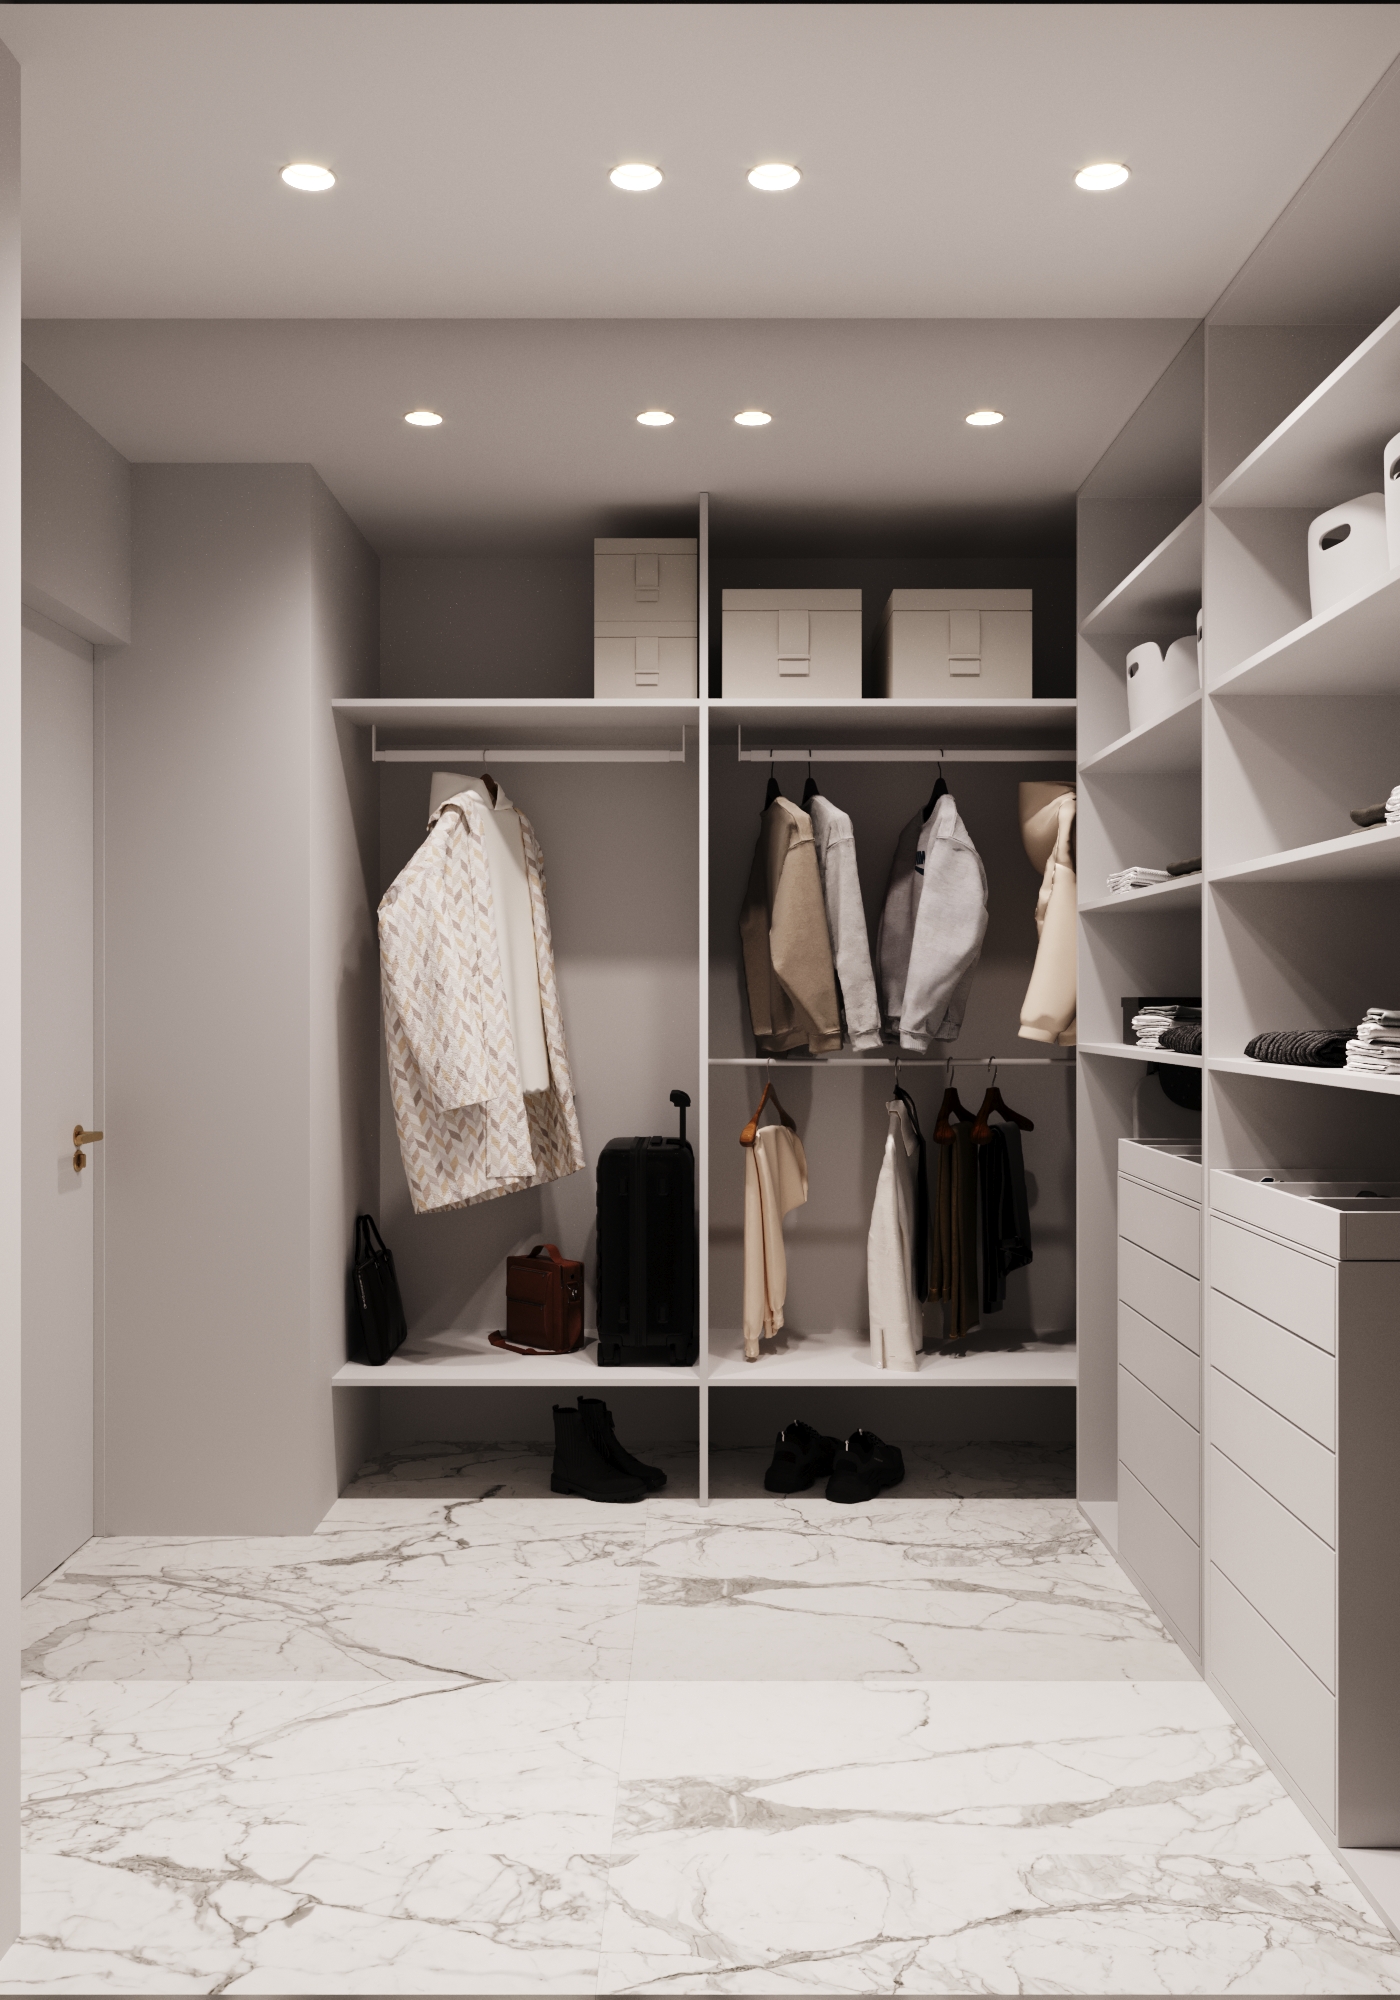 WHITE LIST дизайн квартиры в минимализм | Проекты Prana - Фото 19